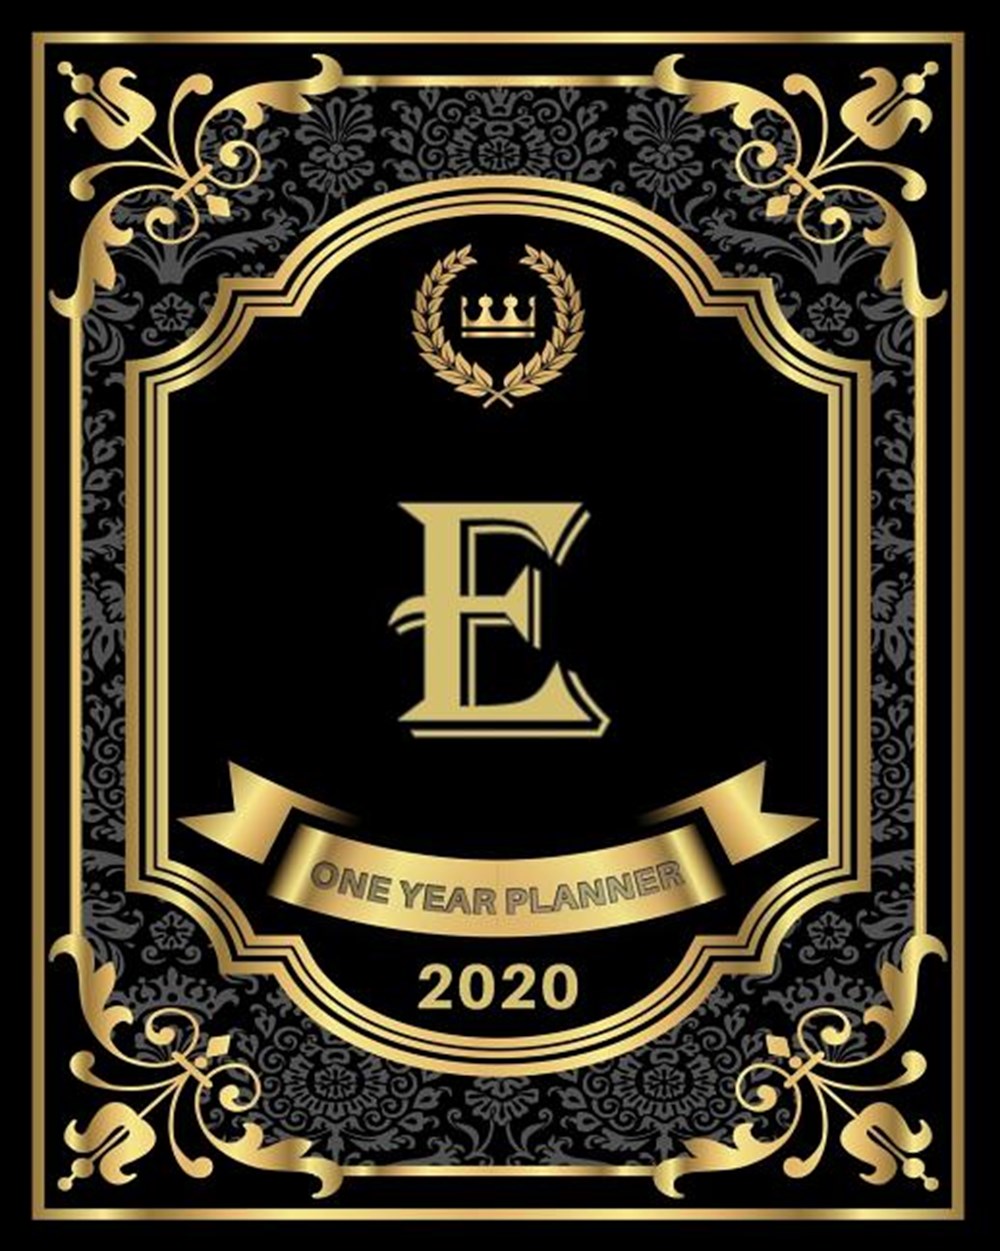 E - 2020 One Year Planner Elegant Black and Gold Monogram Initials - Pretty Calendar Organizer - One